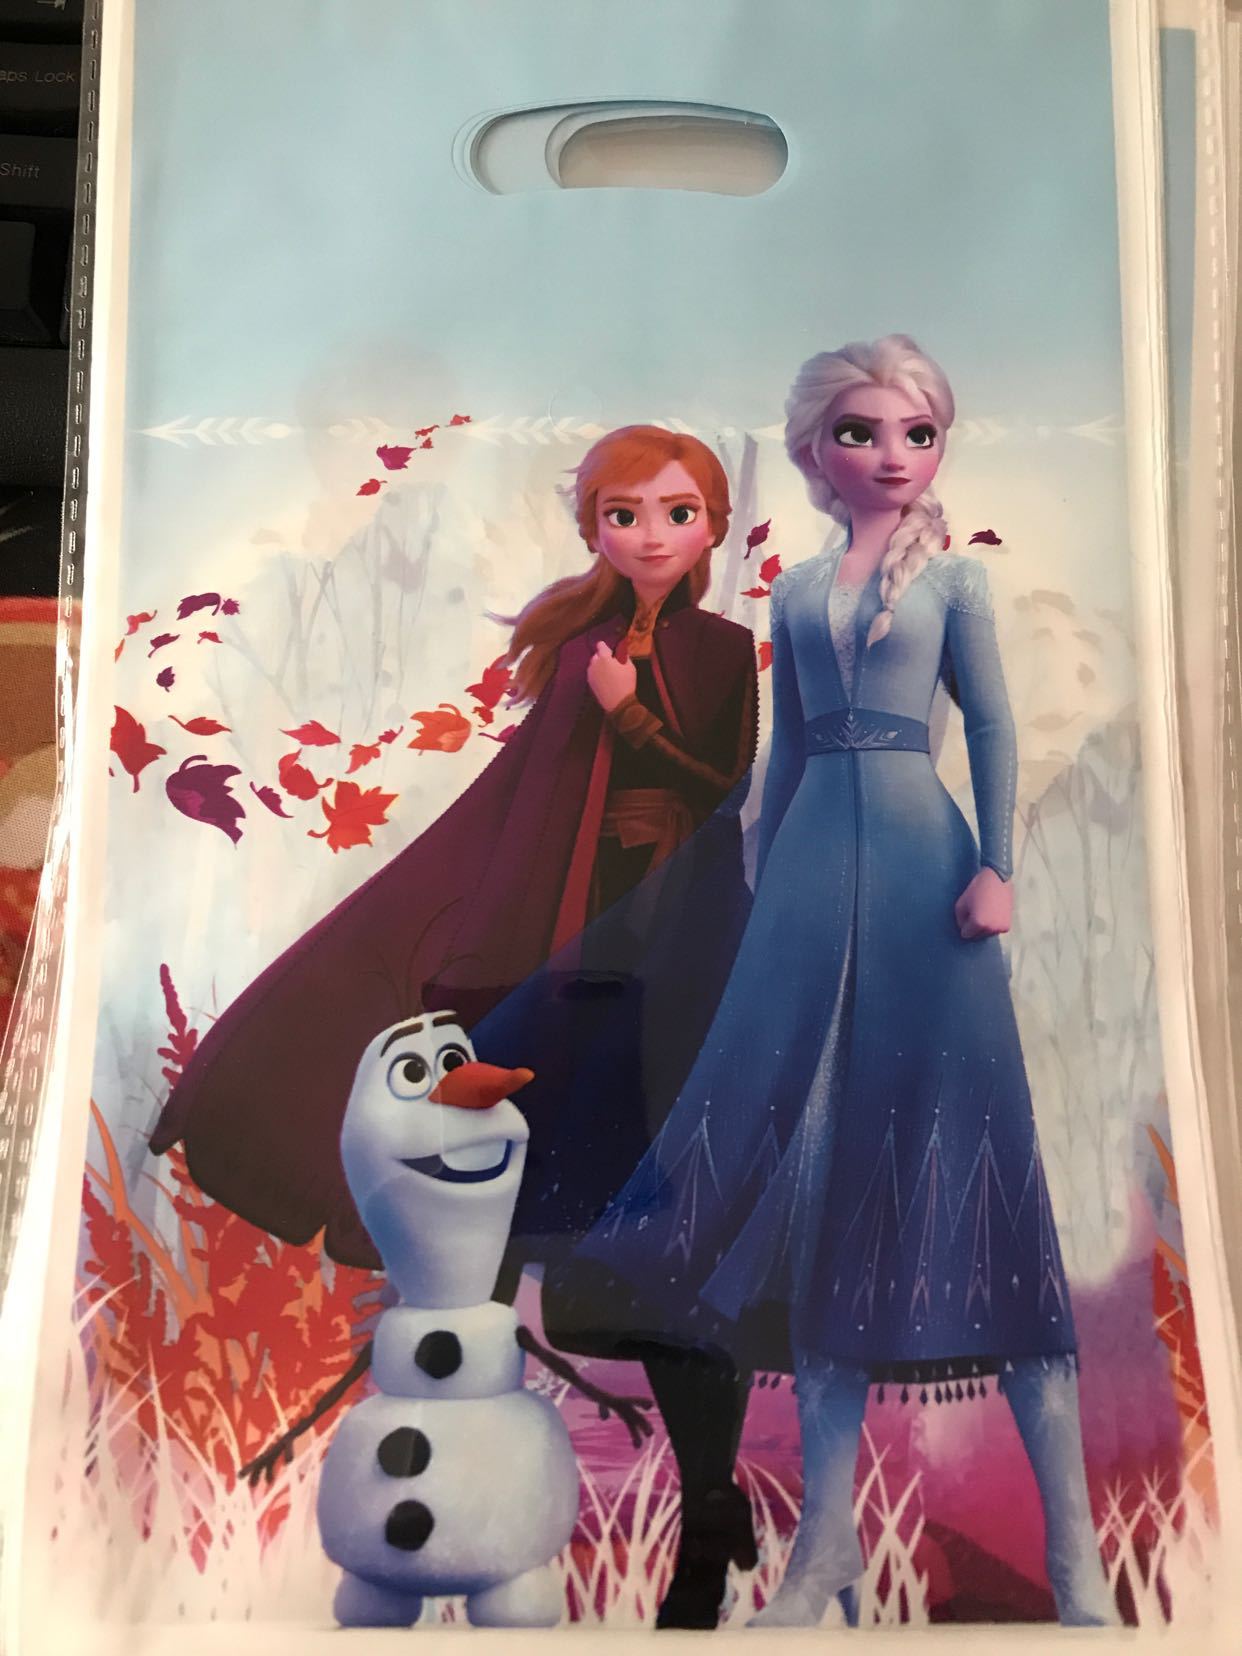 Frozen Elsa Party Pack - lylastore